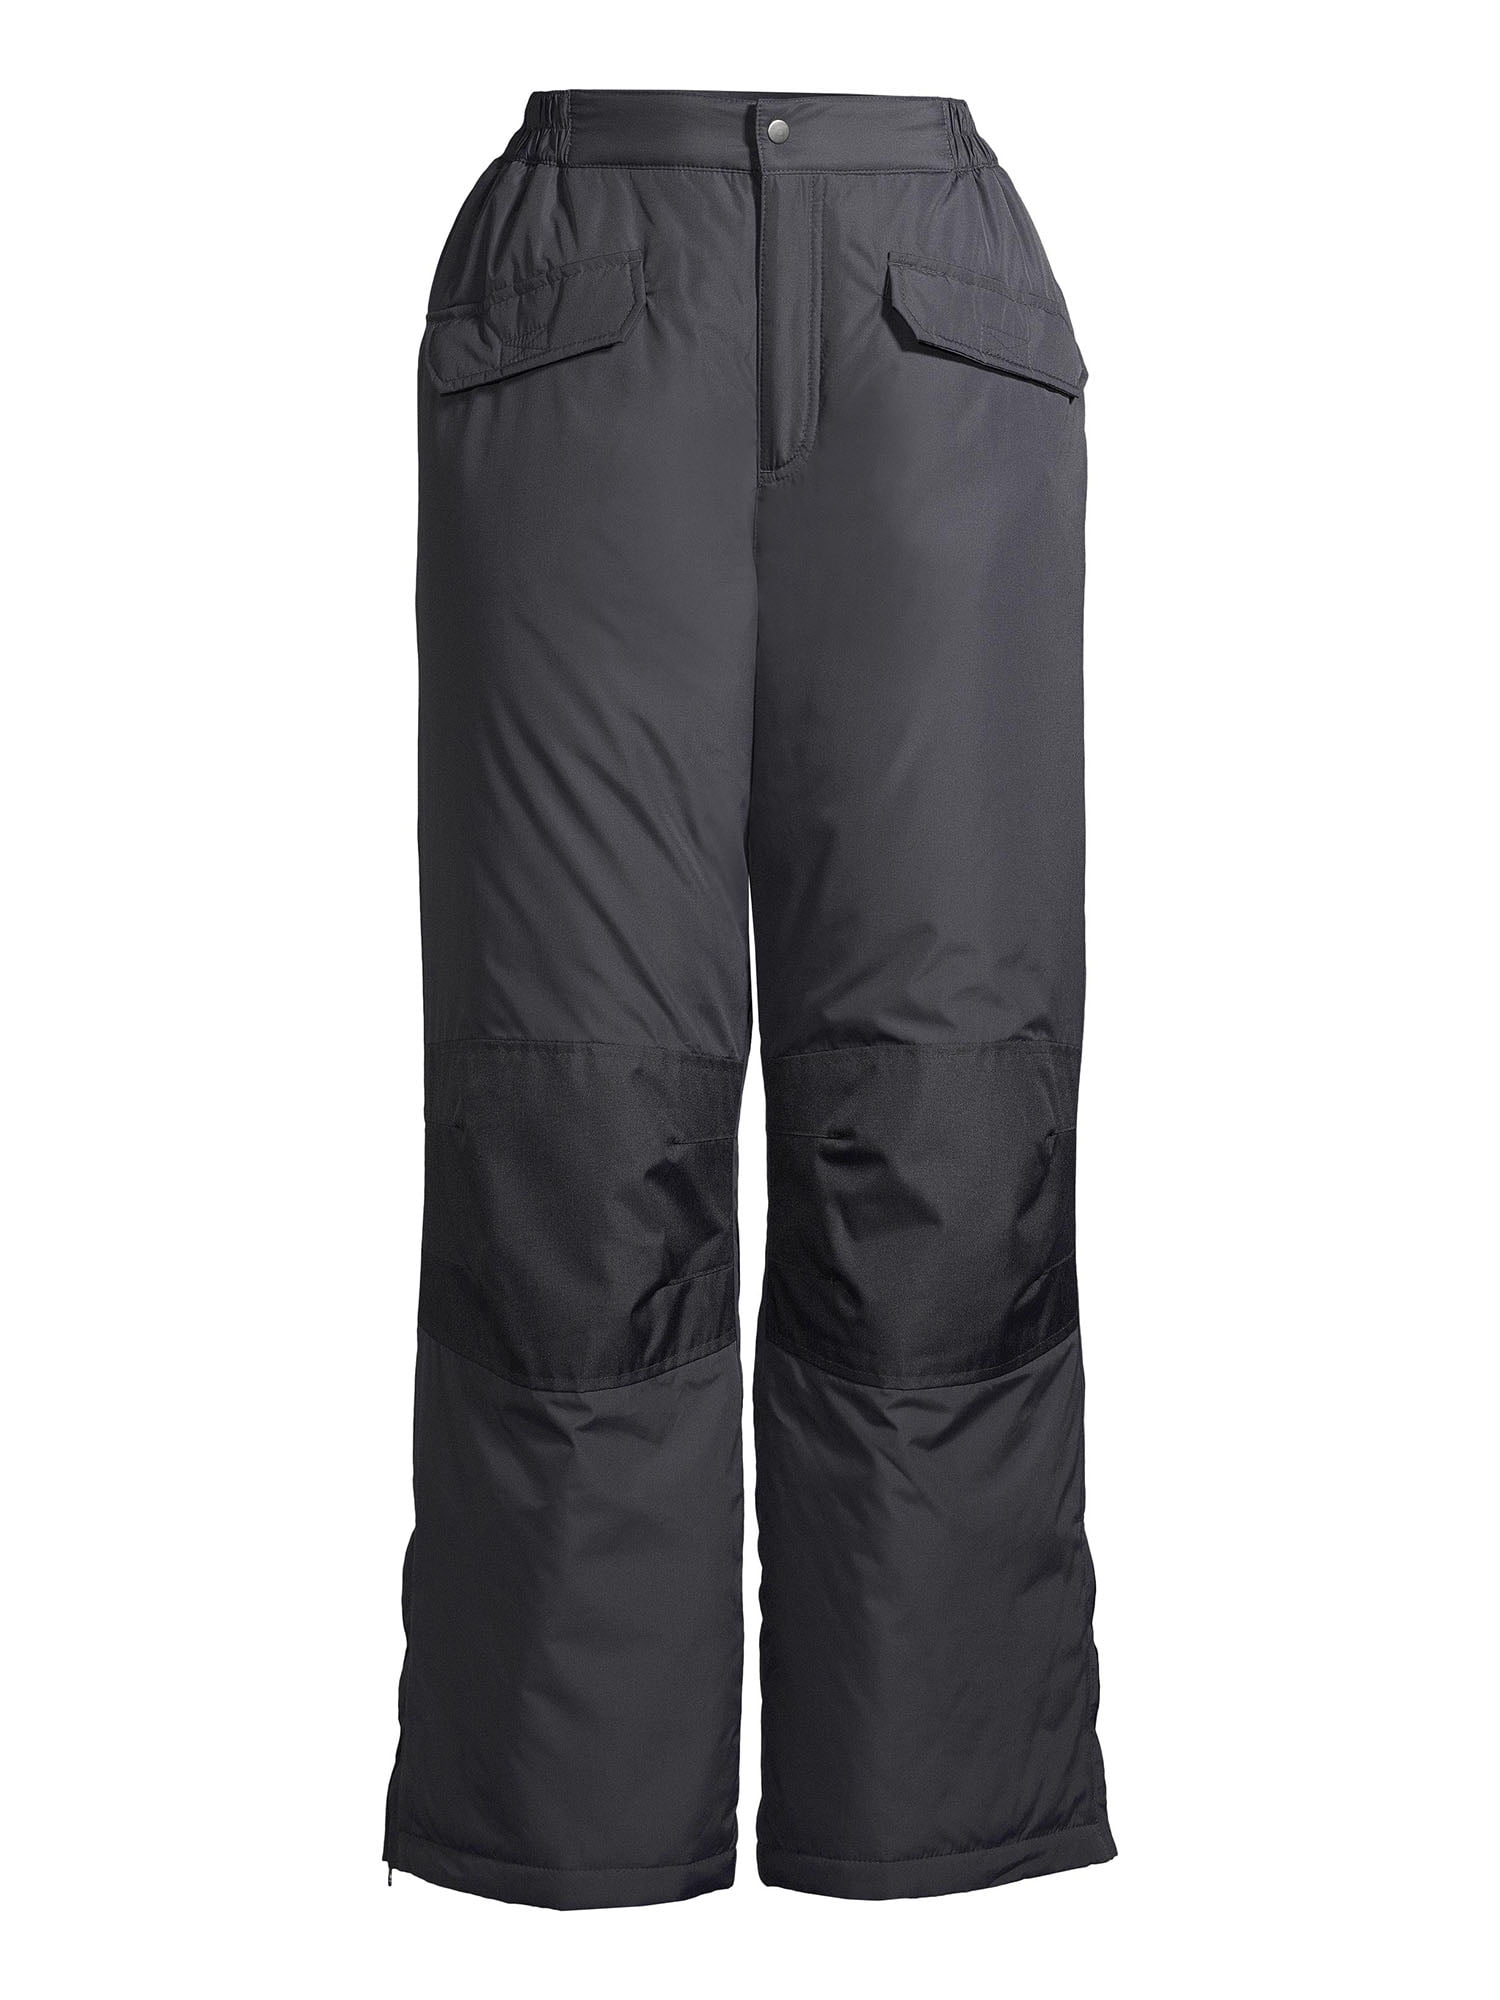 K - Way Insulated Waterpoof Ski-pants L (28) - VertigoGear